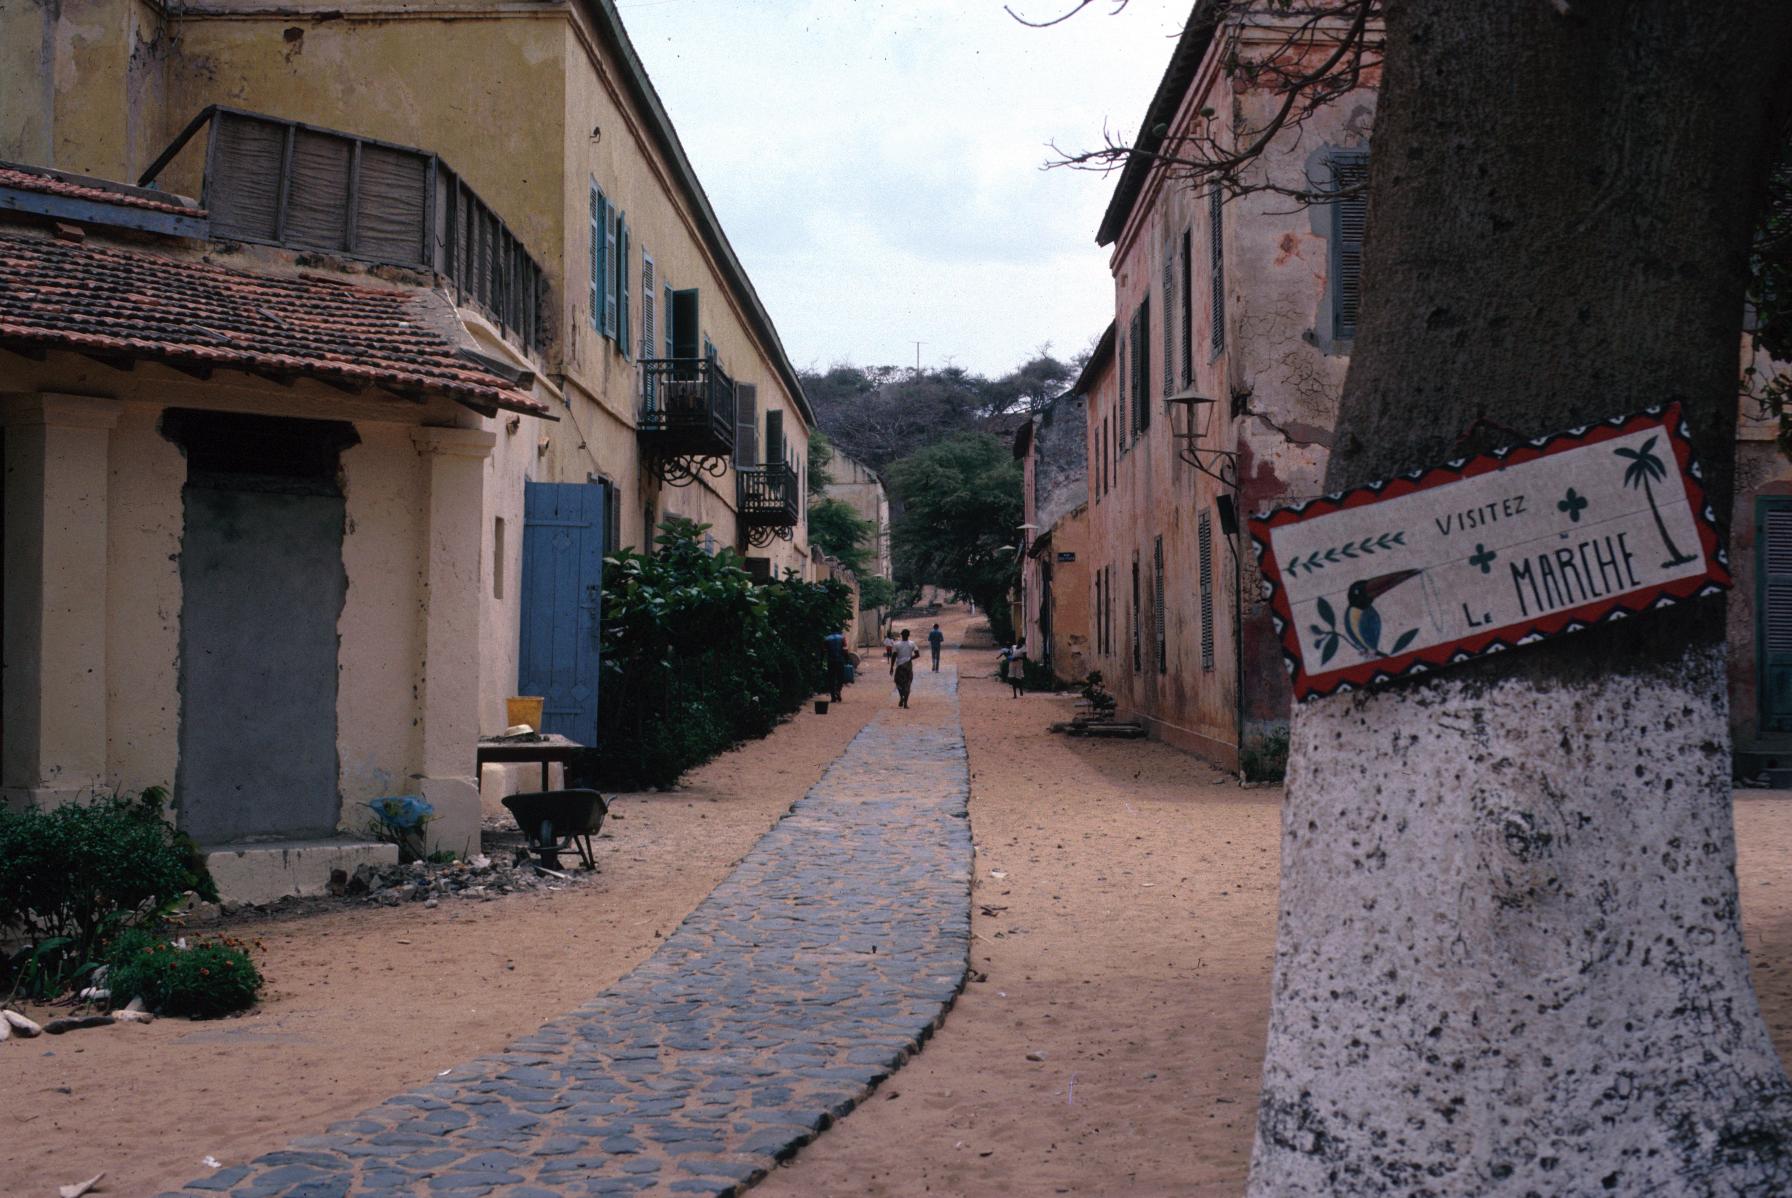 Alley and Buildings on Gorée Island